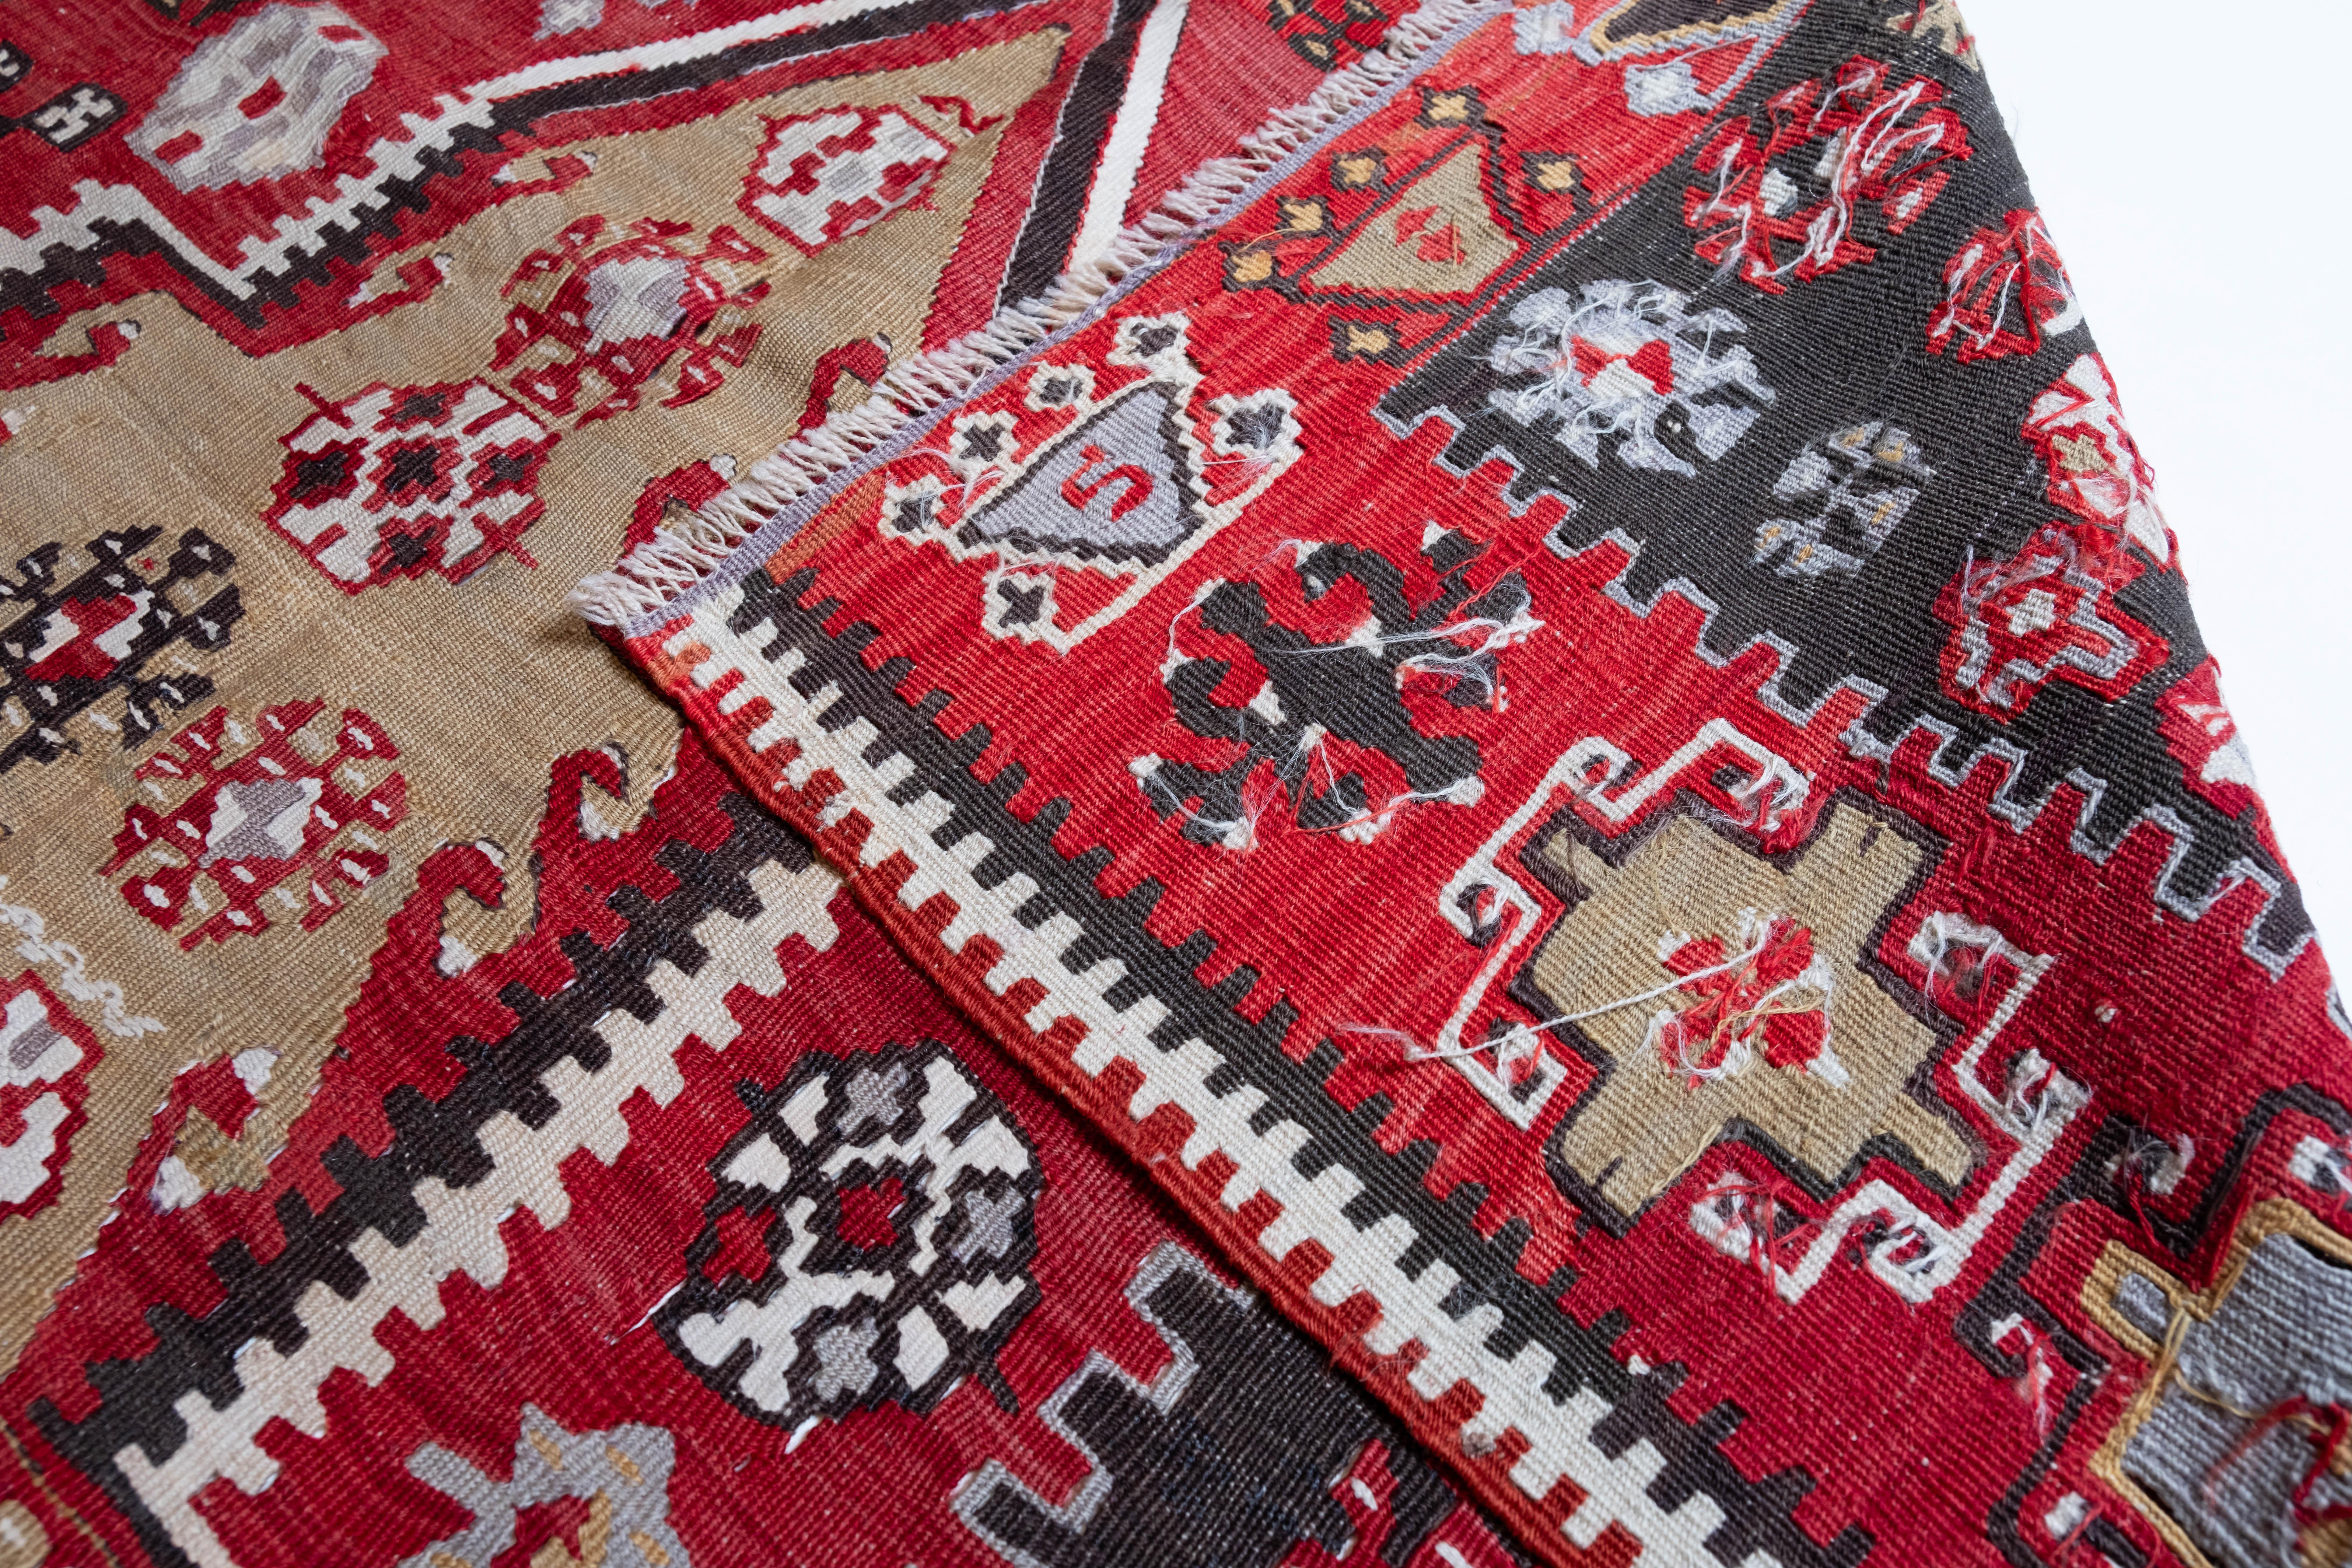 19th Century Antique Gomurgen Kayseri Kilim Rug Wool Old Central Anatolian Turkish Carpet For Sale